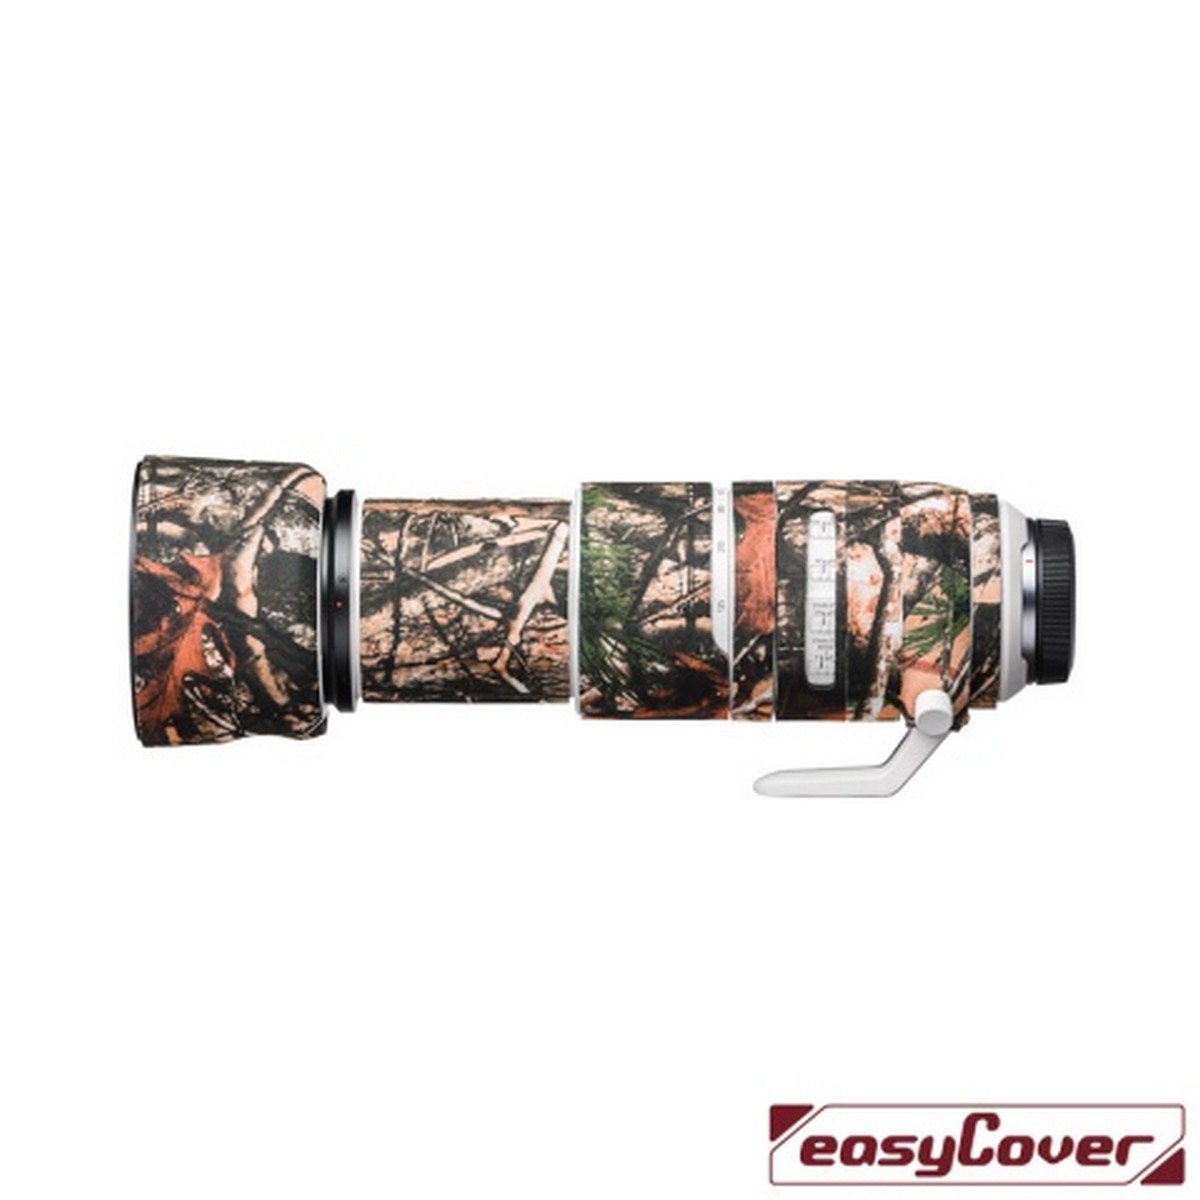 Easycover Lens Oak Objektivschutz für Canon RF 100-500 mm 1:4,5-7,1L IS USM Wald Camouflage